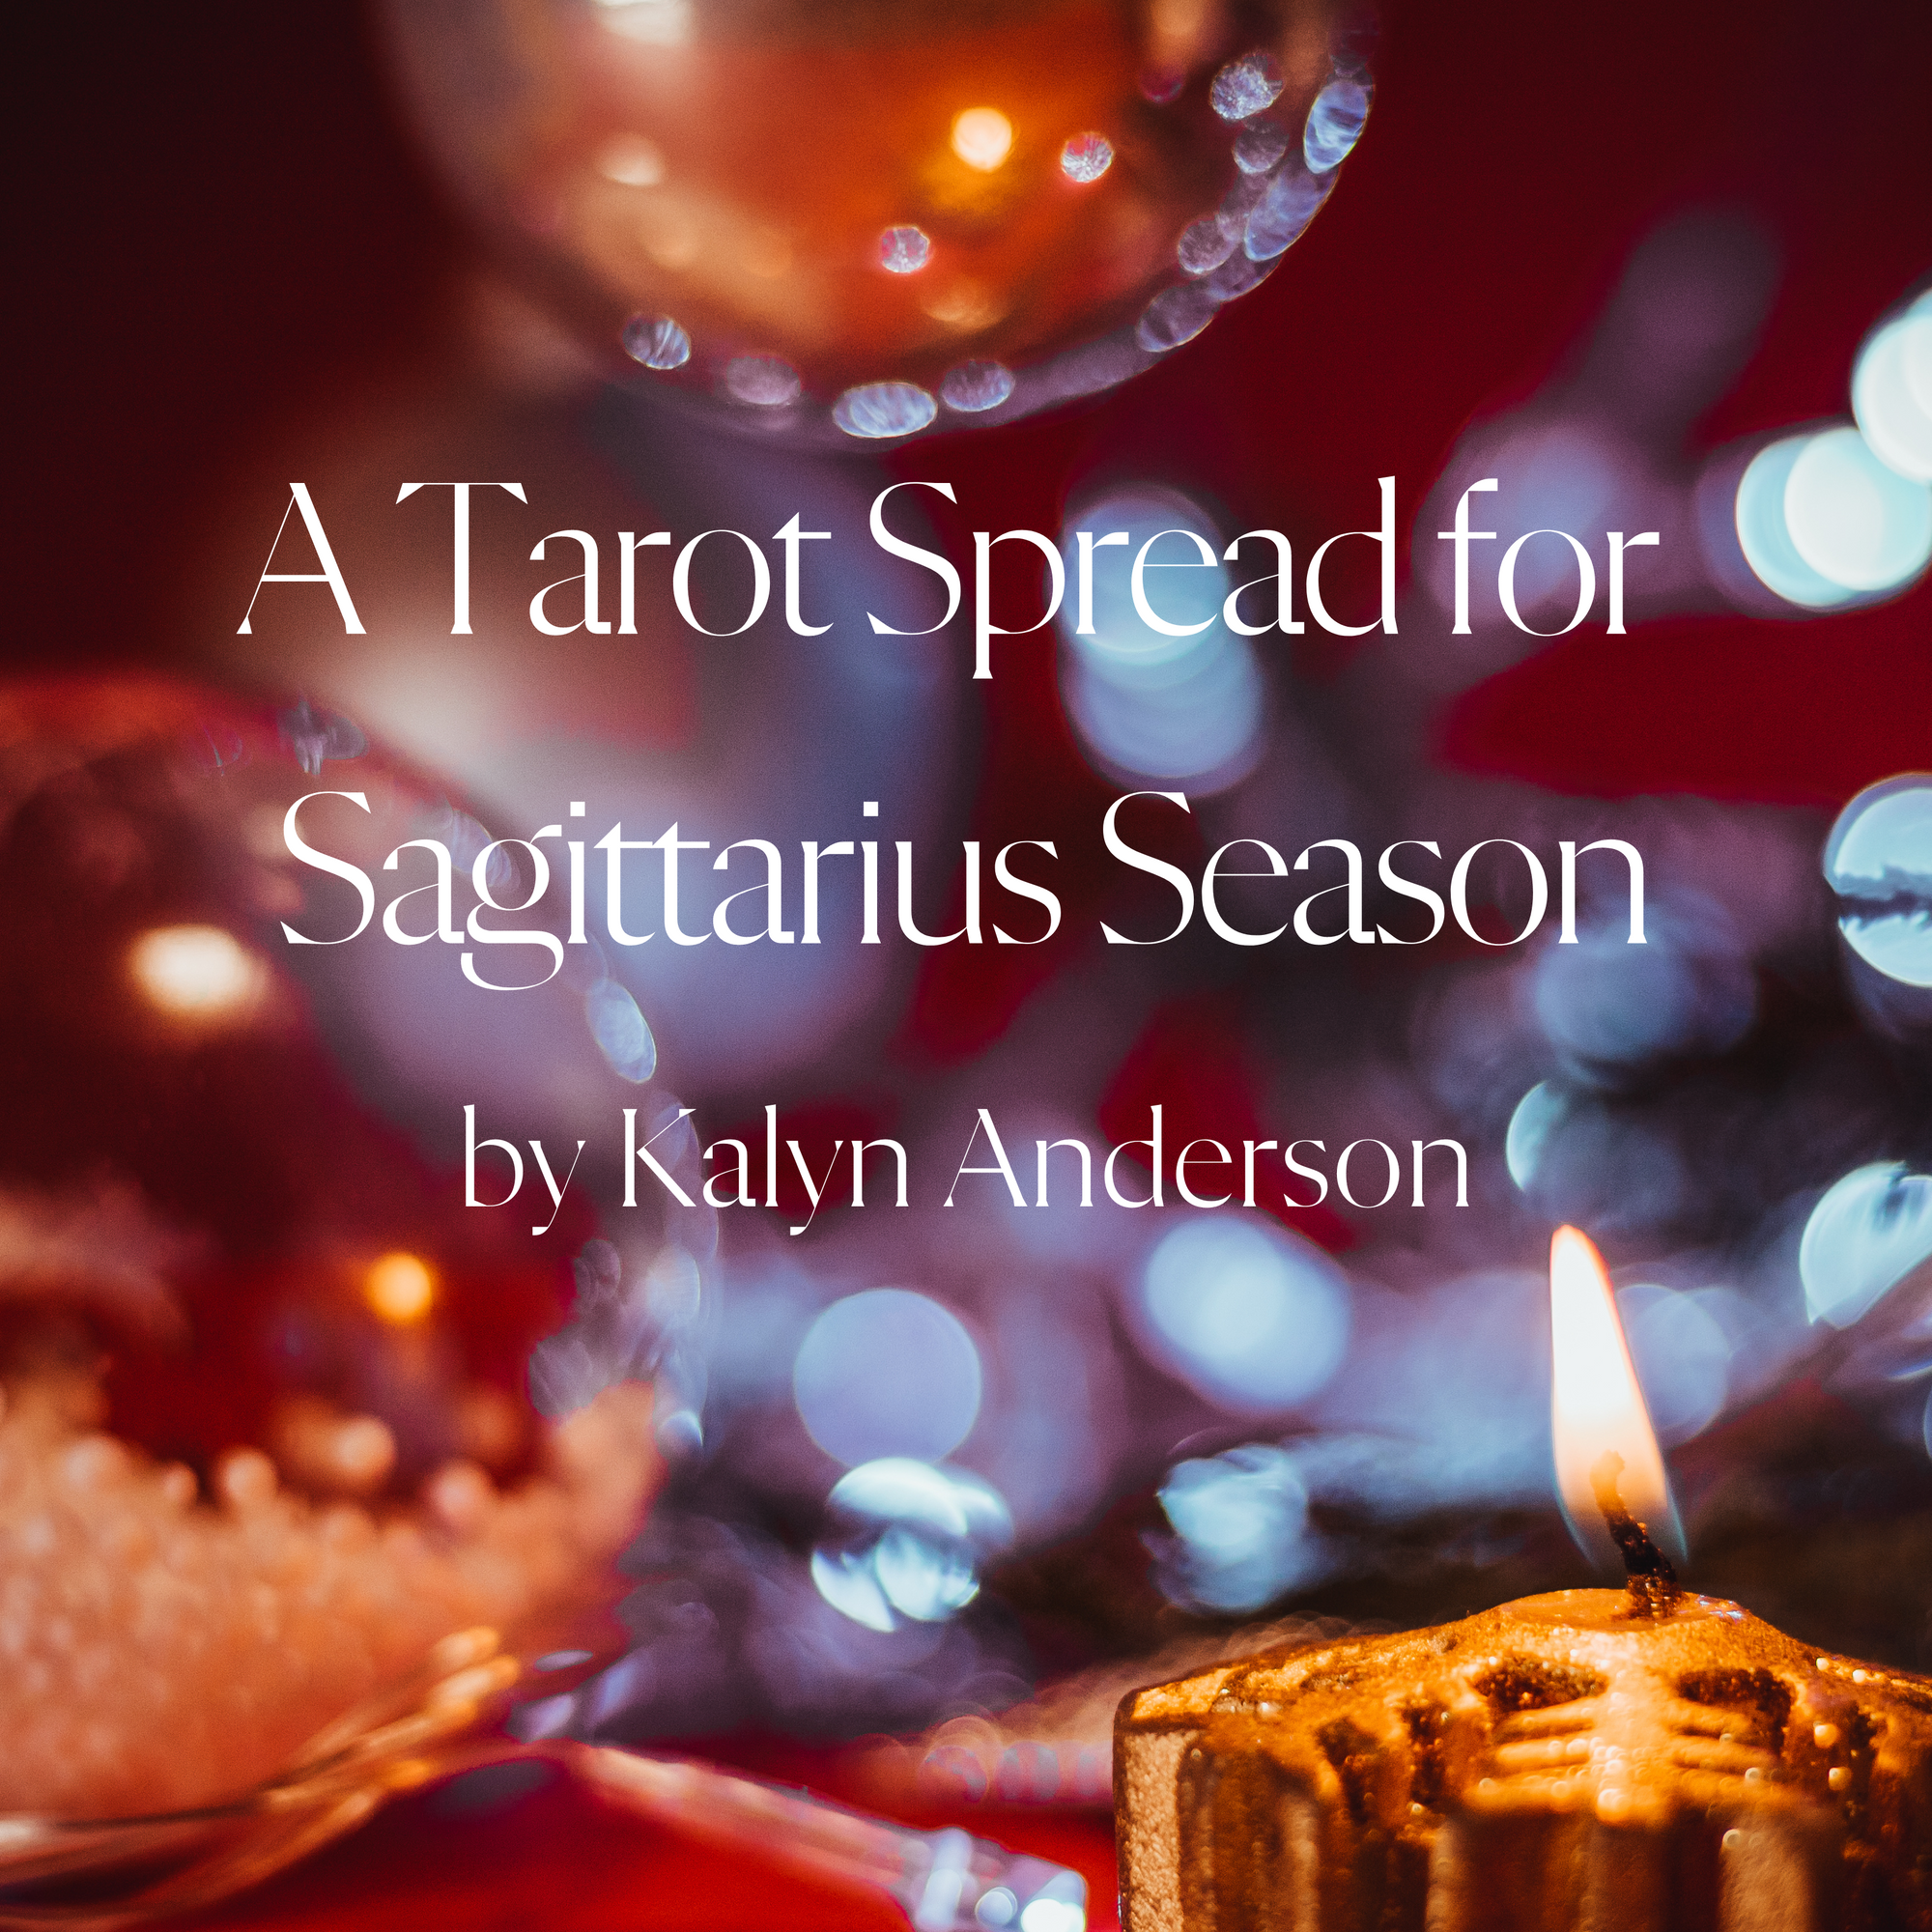 A Tarot Spread for Sagittarius Season